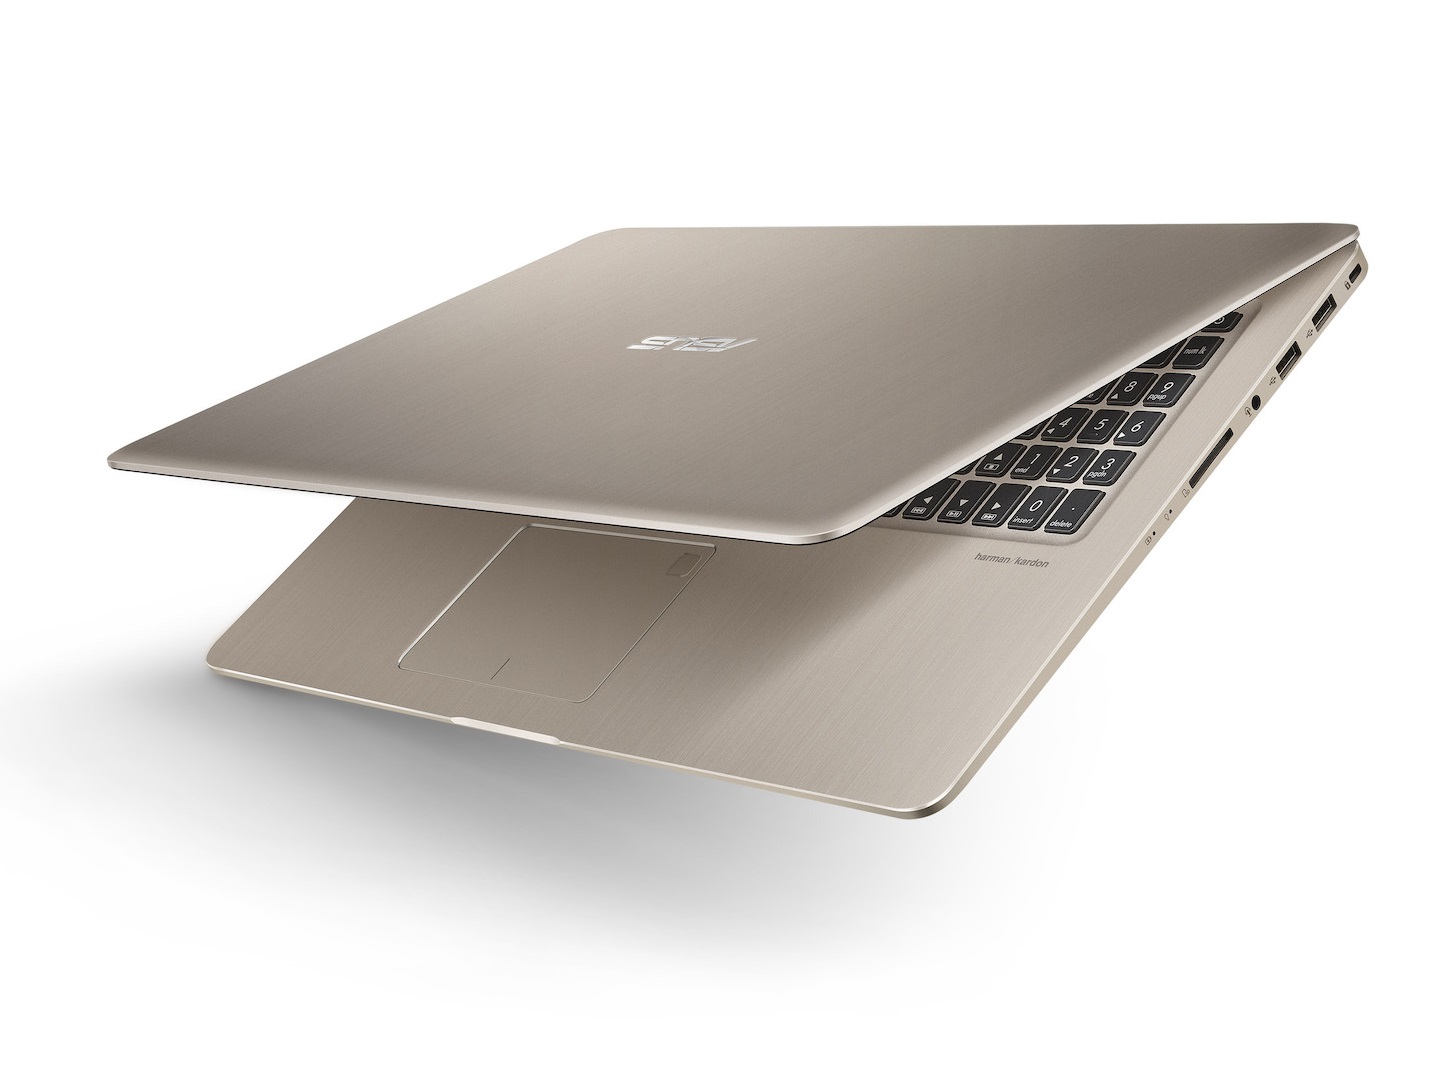 Asus VivoBook Pro 15 N580VD-DM028T -  External Reviews